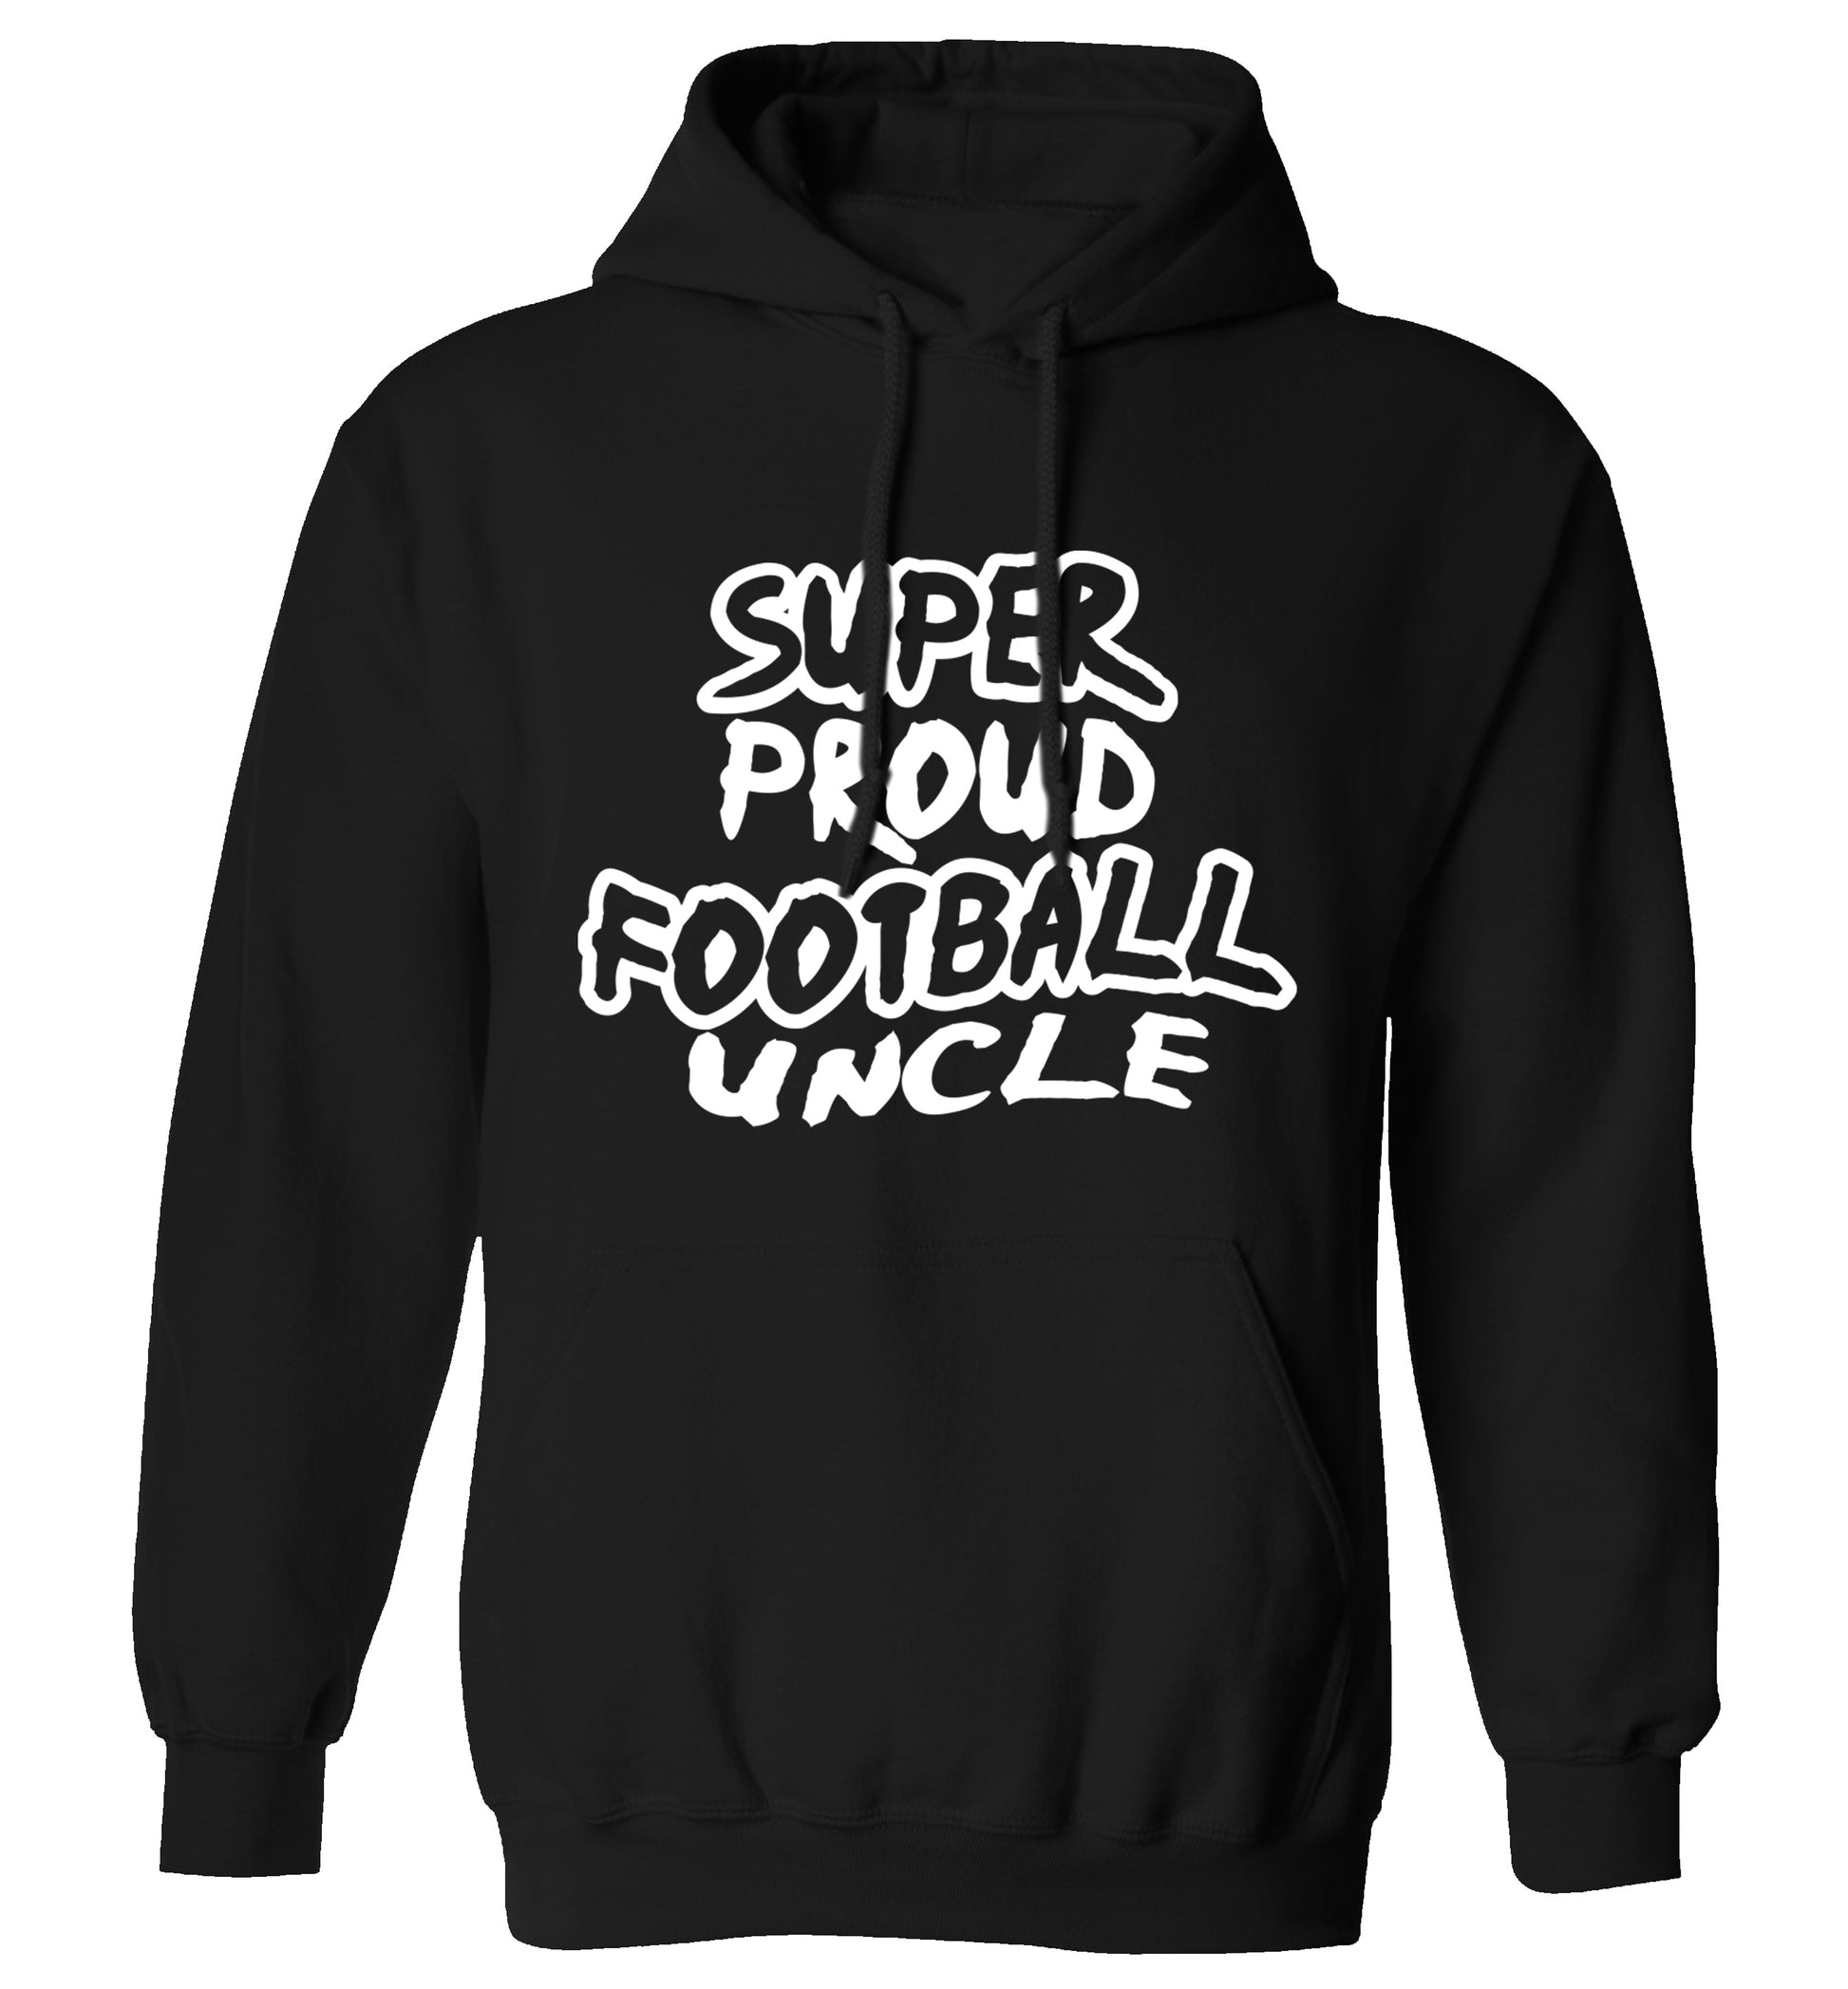 Super proud football uncle adults unisexblack hoodie 2XL